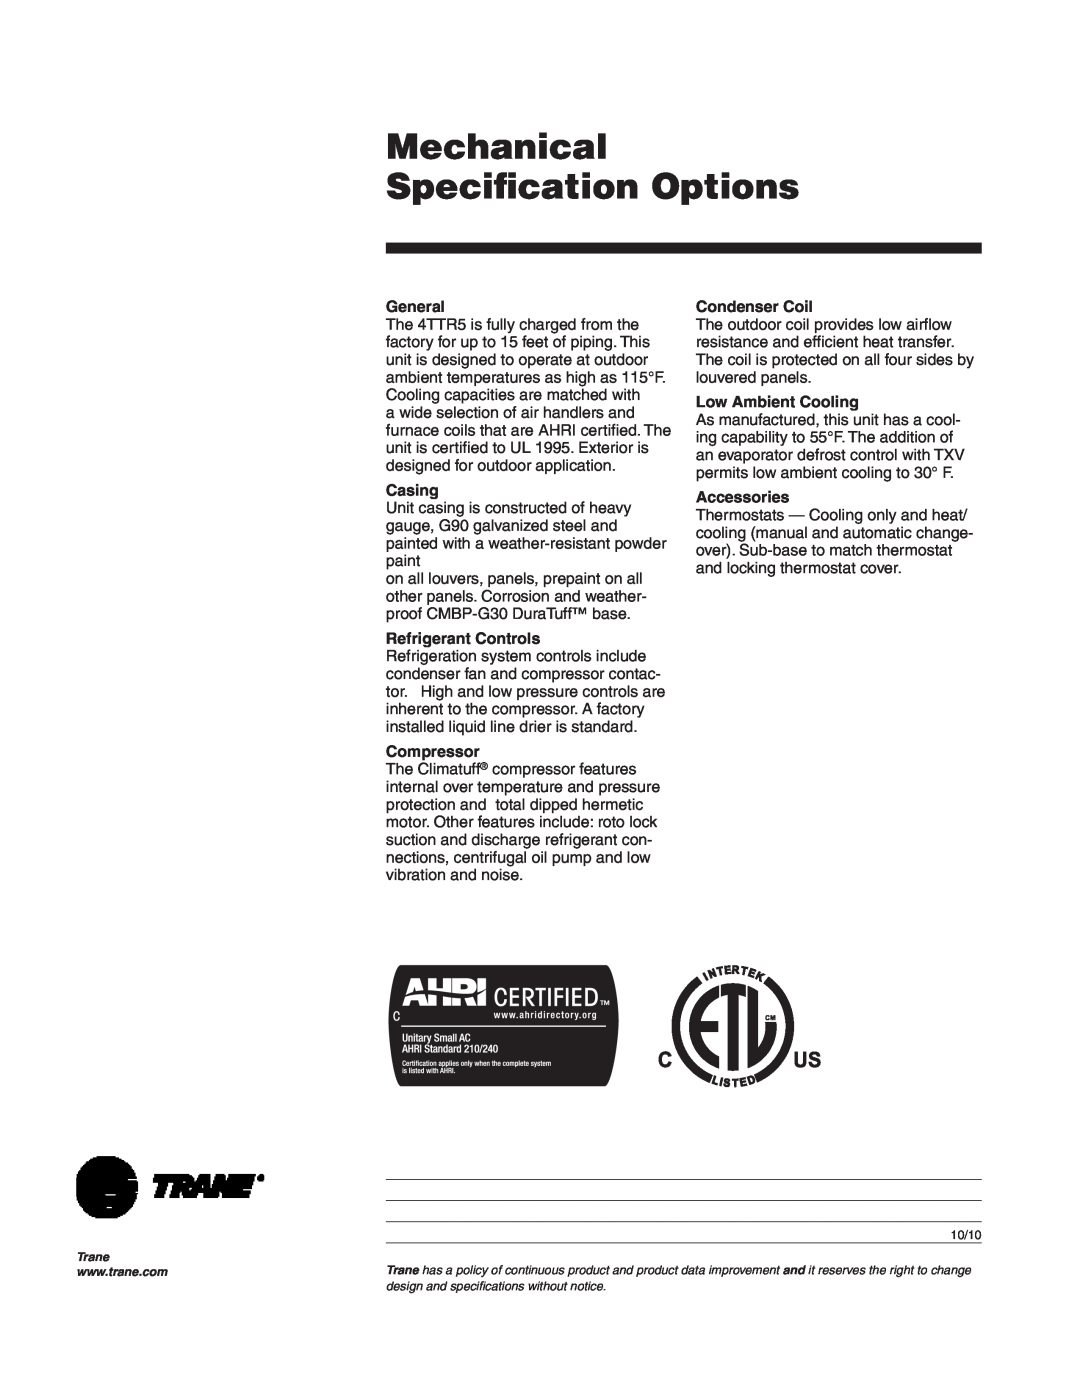 Trane XR15 manual Mechanical Specification­Options, General, Casing, Refrigerant Controls, Compressor, Condenser Coil 